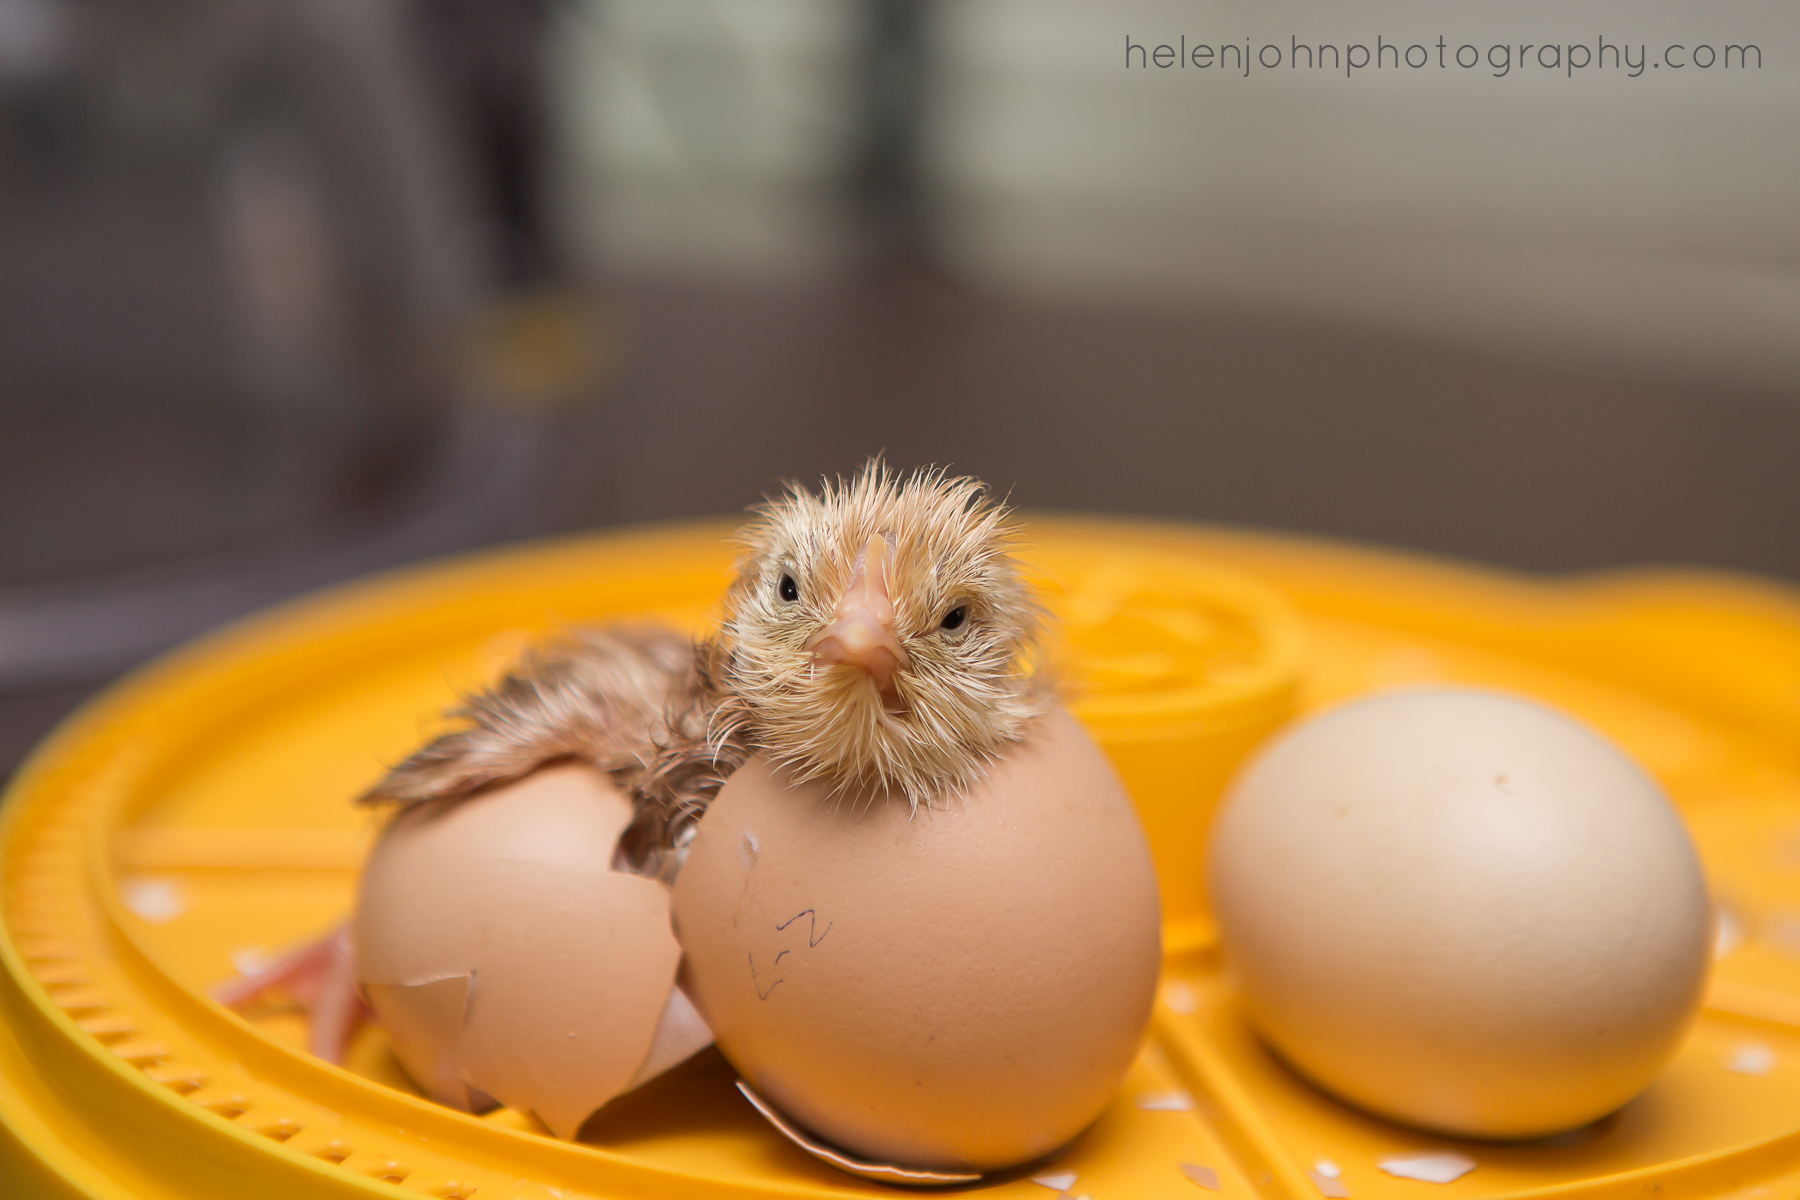 Hatching eggs. Egg Hatch. Hatching chick. Hatch my Egg.